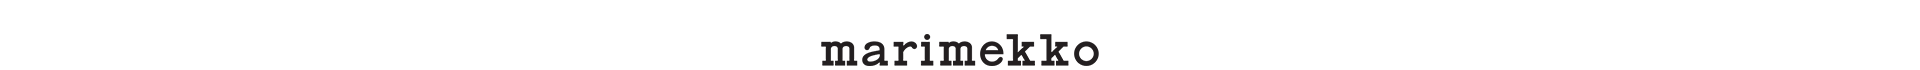 marimekko-logo-wide-png